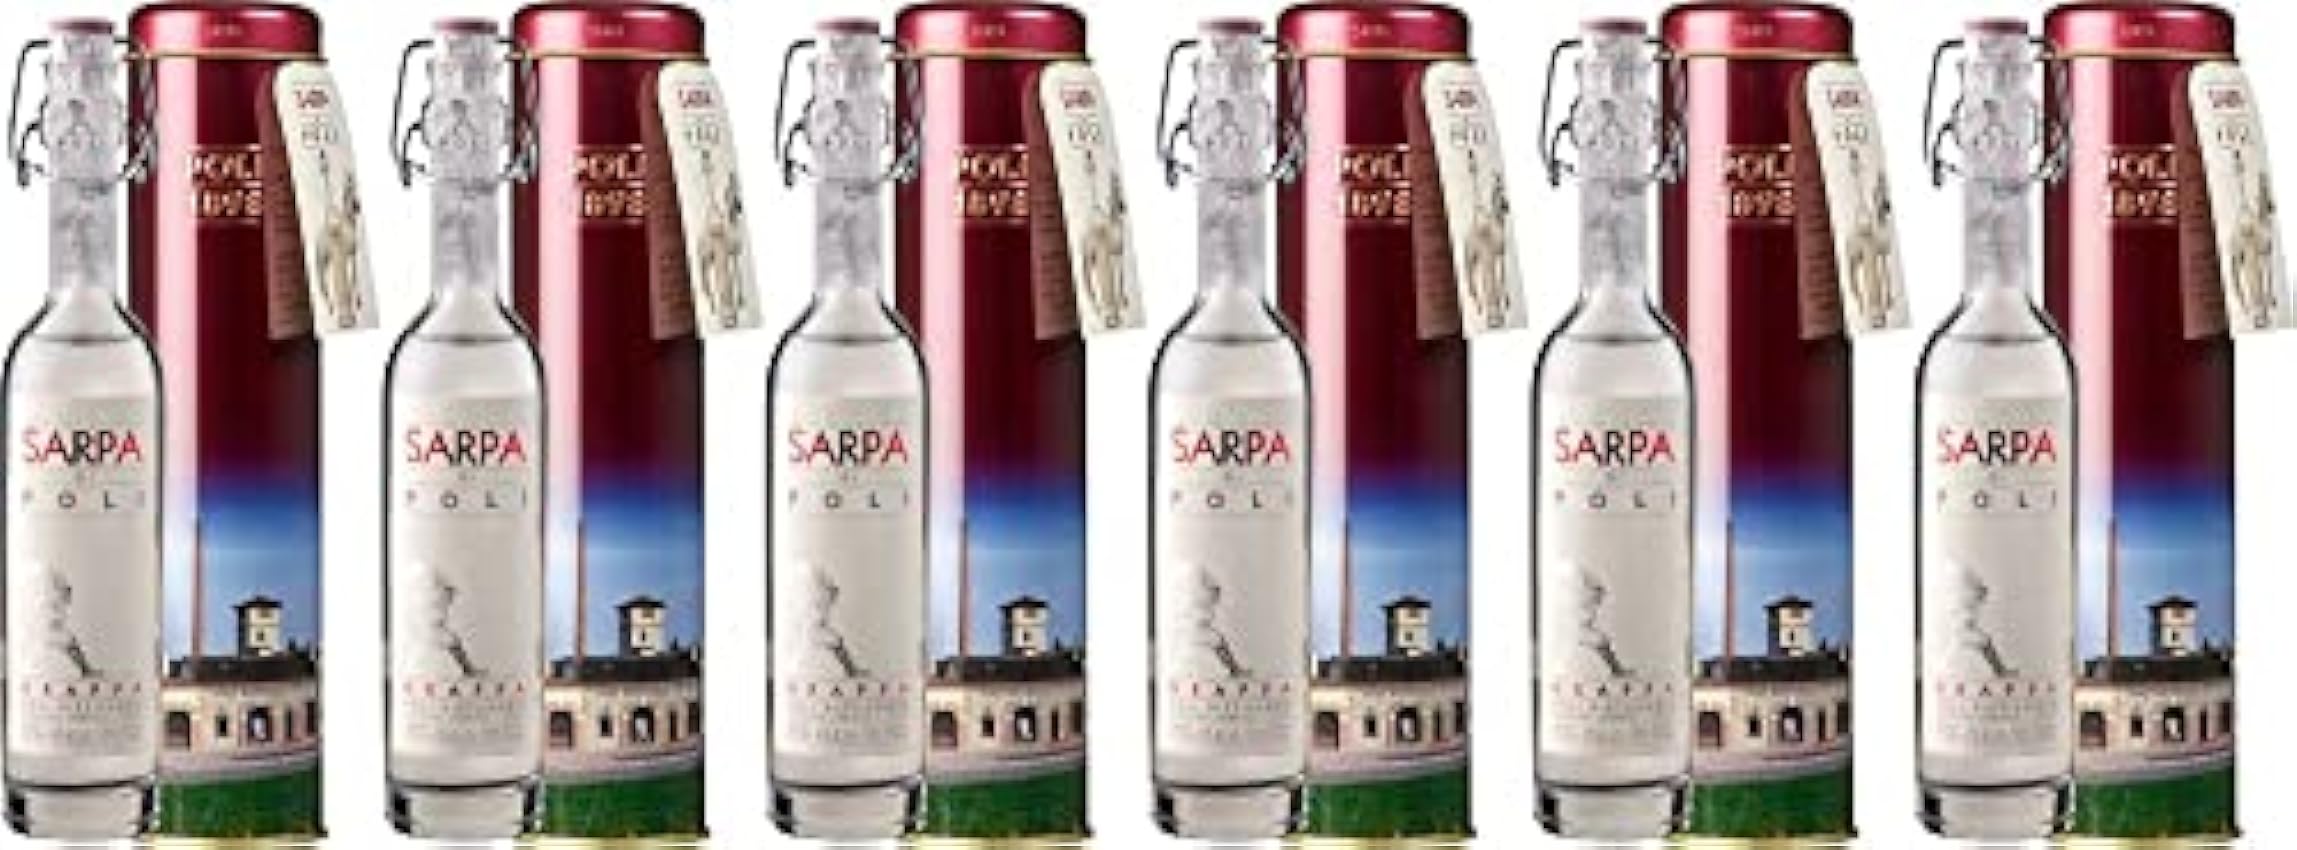 Billige 6x Grappa Sarpa di Poli ´Baby´ - in Geschenkröhre - - Weingut Jacopo Poli, Veneto nUwuEnCe gut verkaufen